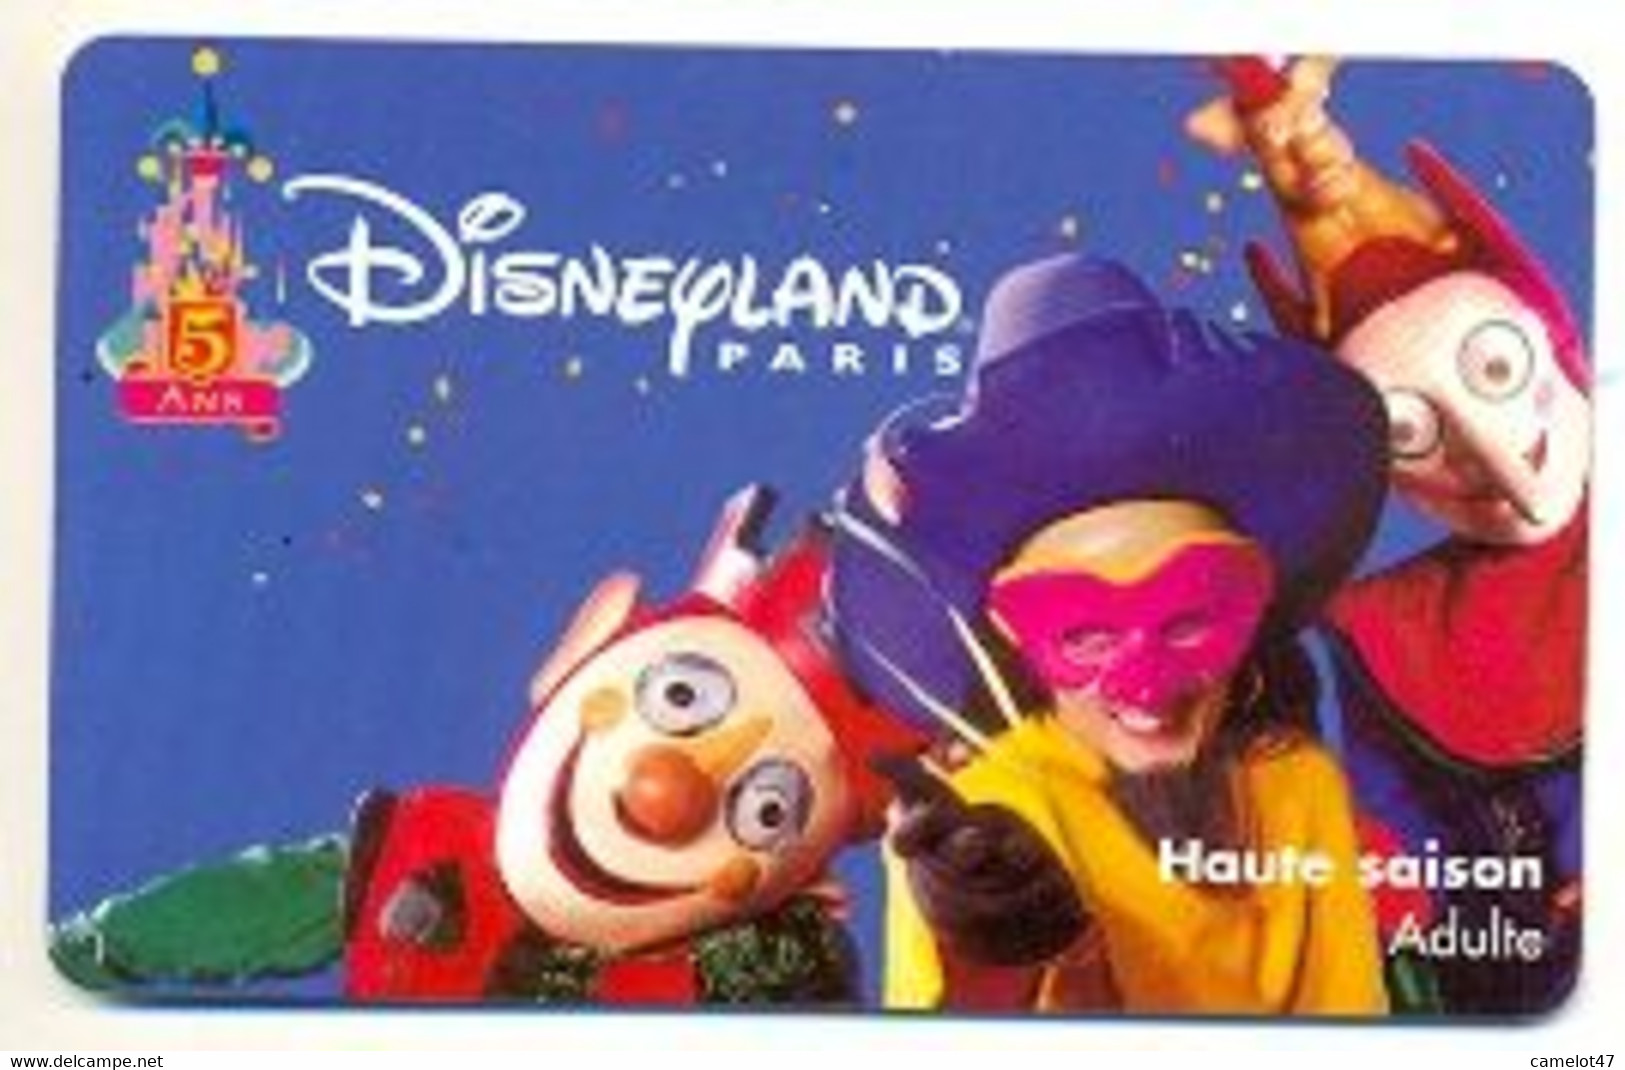 Disneyland Paris Ticket, Usagé, Used Condition. # Dtp-6 - Disney Passports